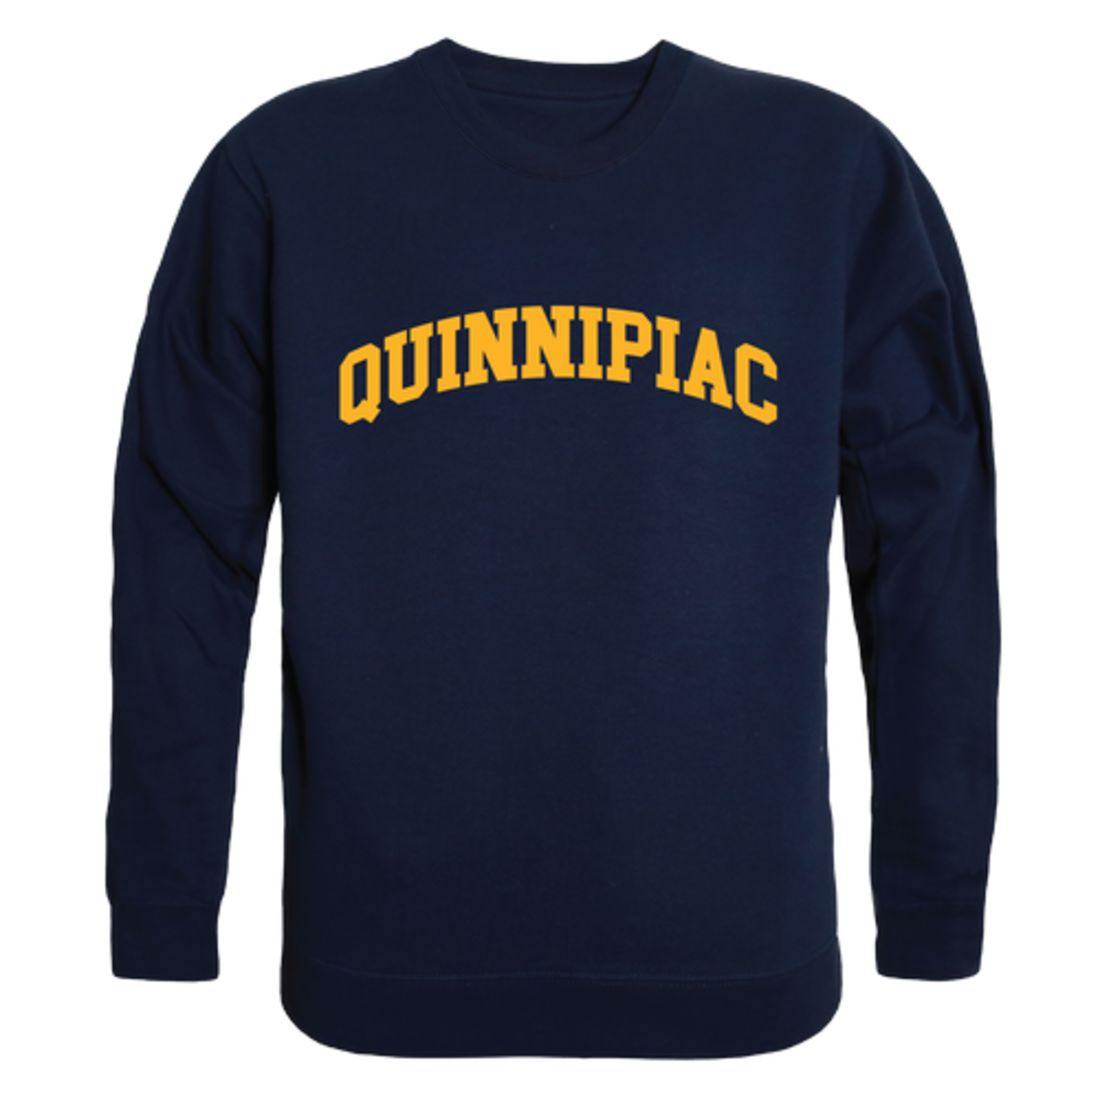 Quinnipiac University Apparel and Clothing, Quinnipiac University Jerseys,  Shirts, Merchandise